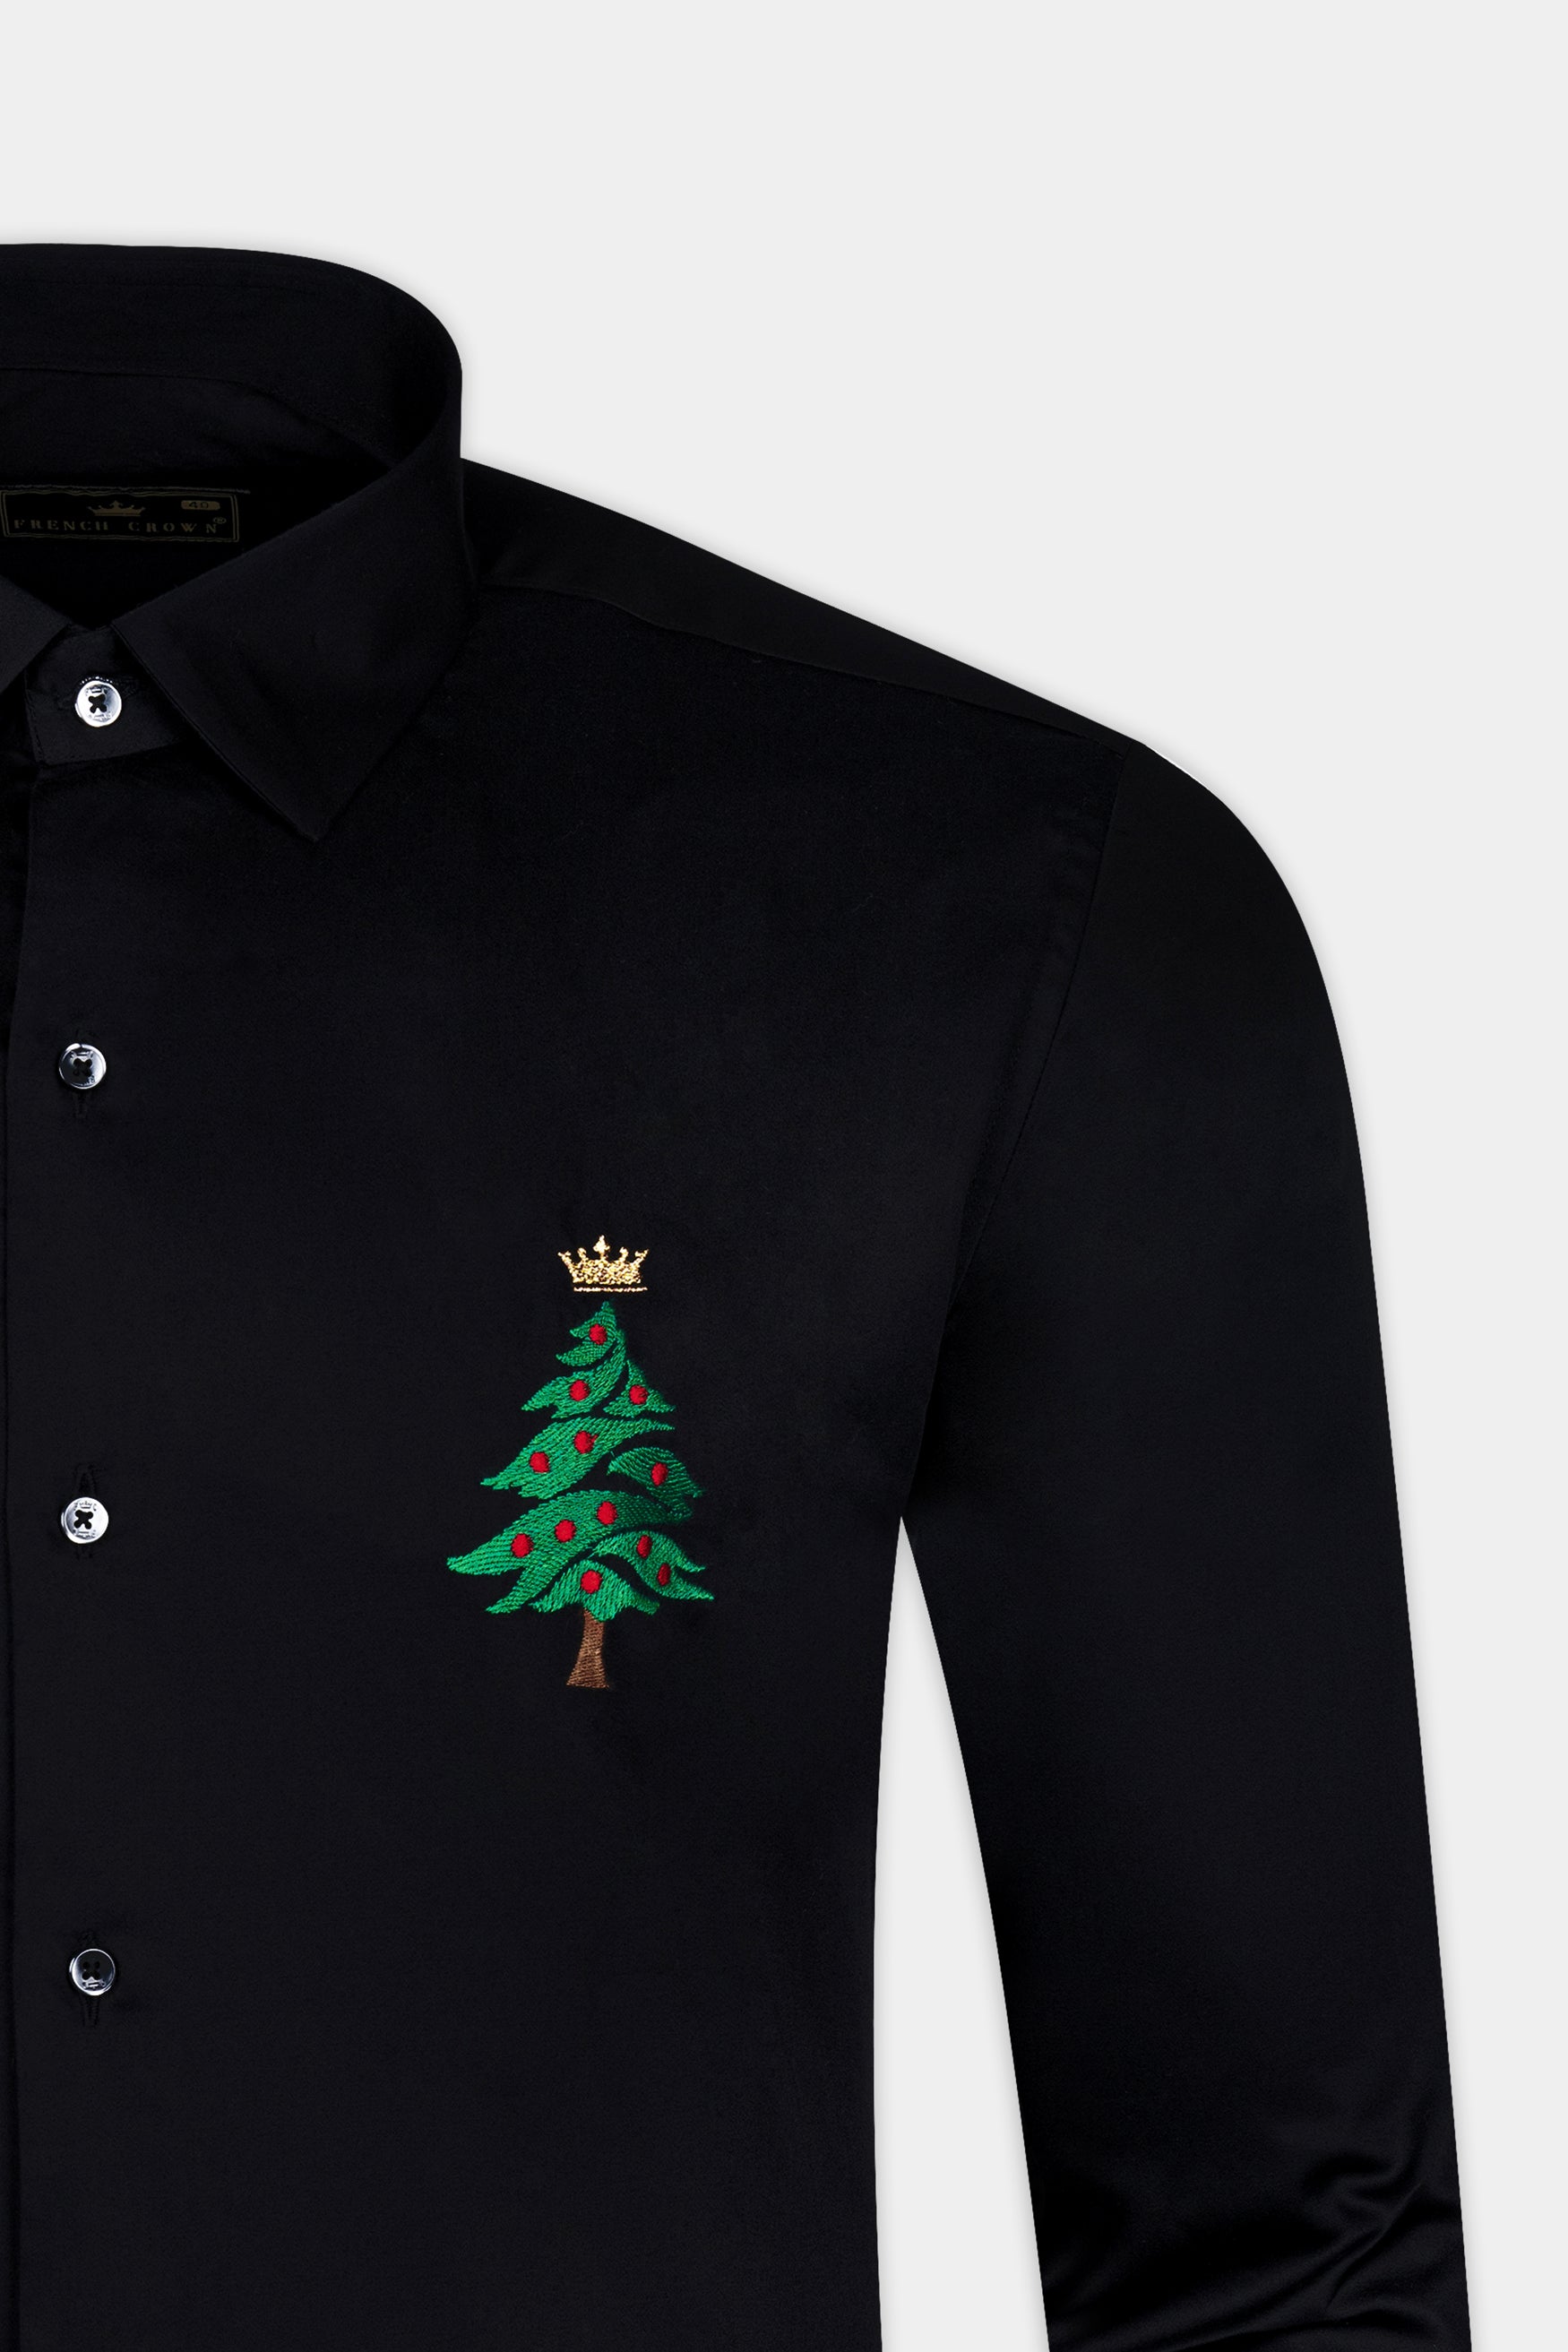 Jade Black Christmas Tree Embroidered Subtle Sheen Super Soft Premium Cotton Designer Shirt 12248-NP-BLK-E382-38, 12248-NP-BLK-E382-H-38, 12248-NP-BLK-E382-39, 12248-NP-BLK-E382-H-39, 12248-NP-BLK-E382-40, 12248-NP-BLK-E382-H-40, 12248-NP-BLK-E382-42, 12248-NP-BLK-E382-H-42, 12248-NP-BLK-E382-44, 12248-NP-BLK-E382-H-44, 12248-NP-BLK-E382-46, 12248-NP-BLK-E382-H-46, 12248-NP-BLK-E382-48, 12248-NP-BLK-E382-H-48, 12248-NP-BLK-E382-50, 12248-NP-BLK-E382-H-50, 12248-NP-BLK-E382-52, 12248-NP-BLK-E382-H-52